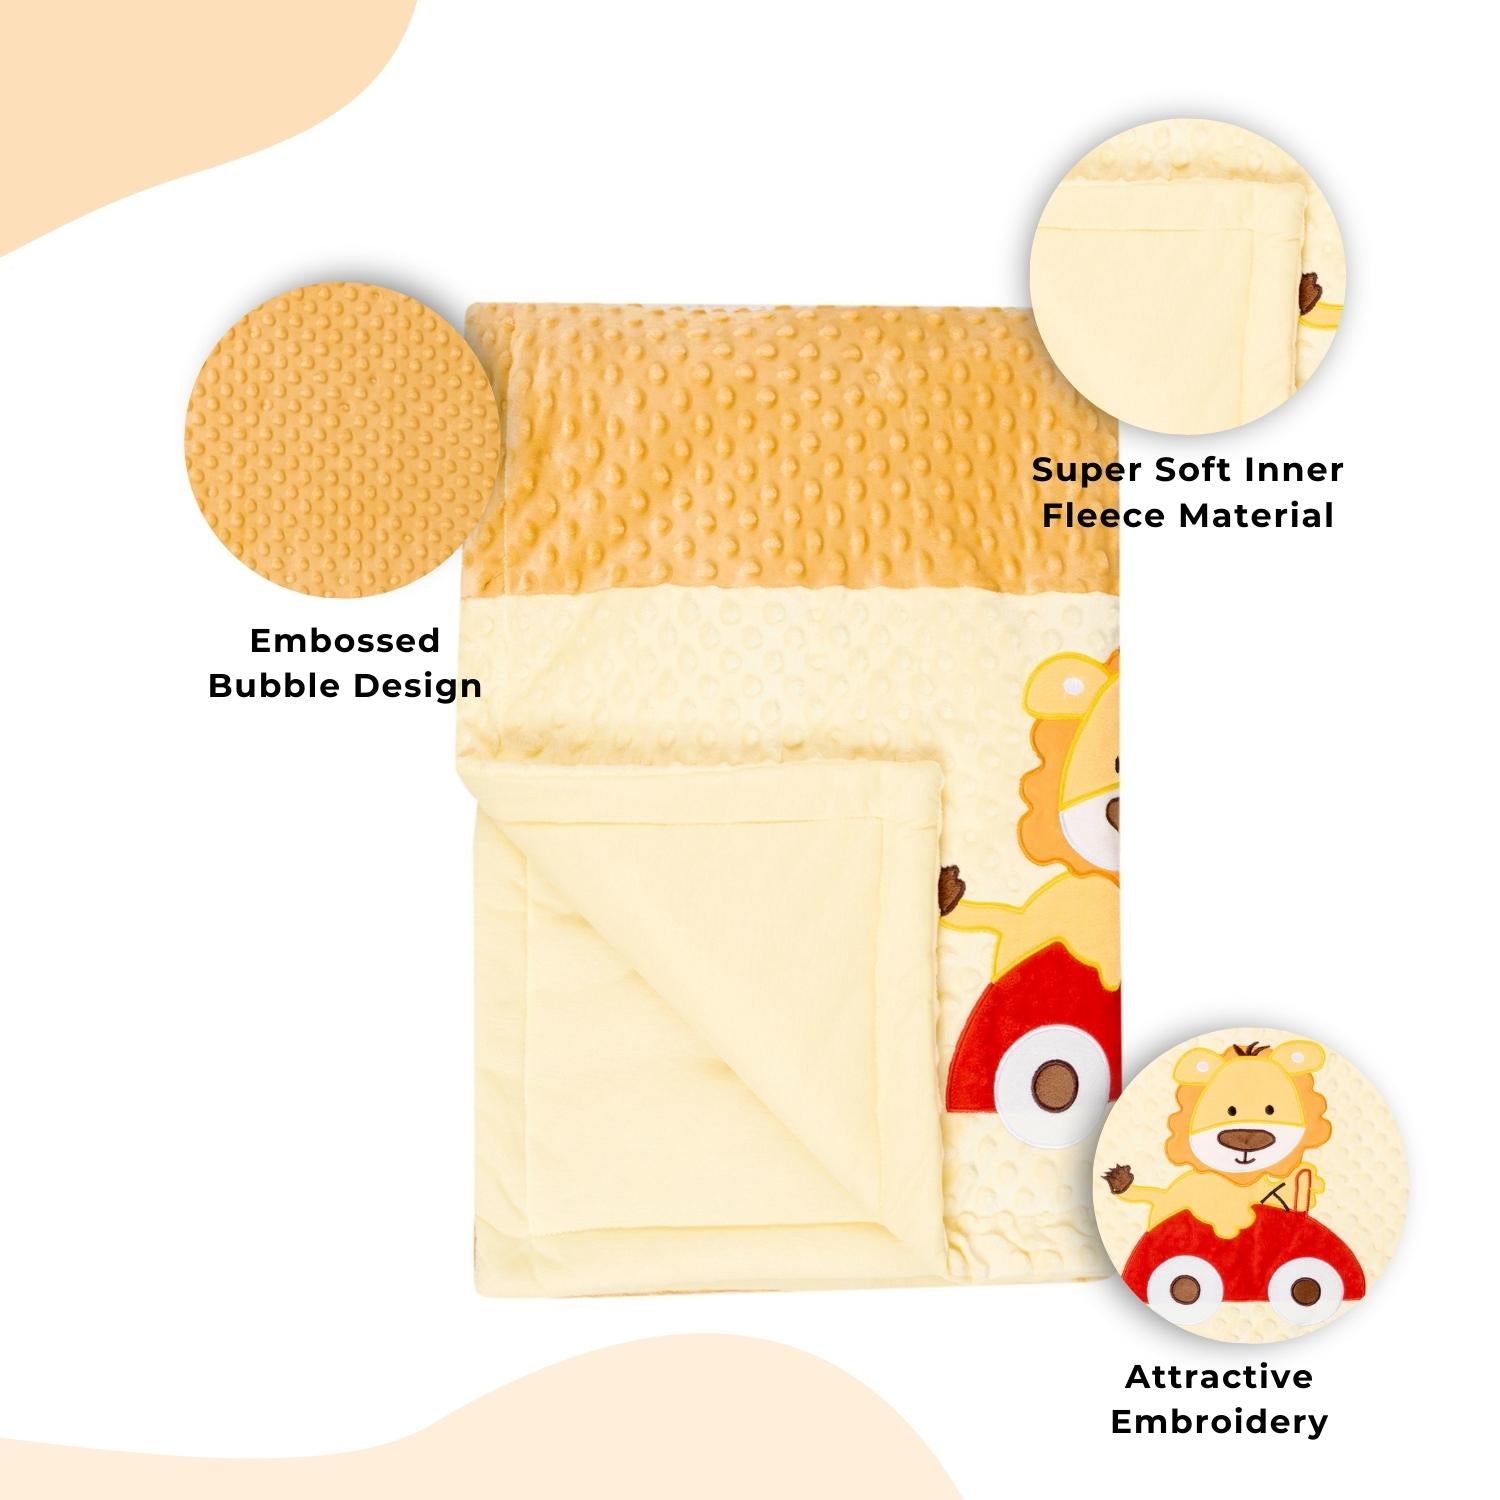 Baby Moo Racing Lion Plush Cotton All Season Nursery Blanket - Brown